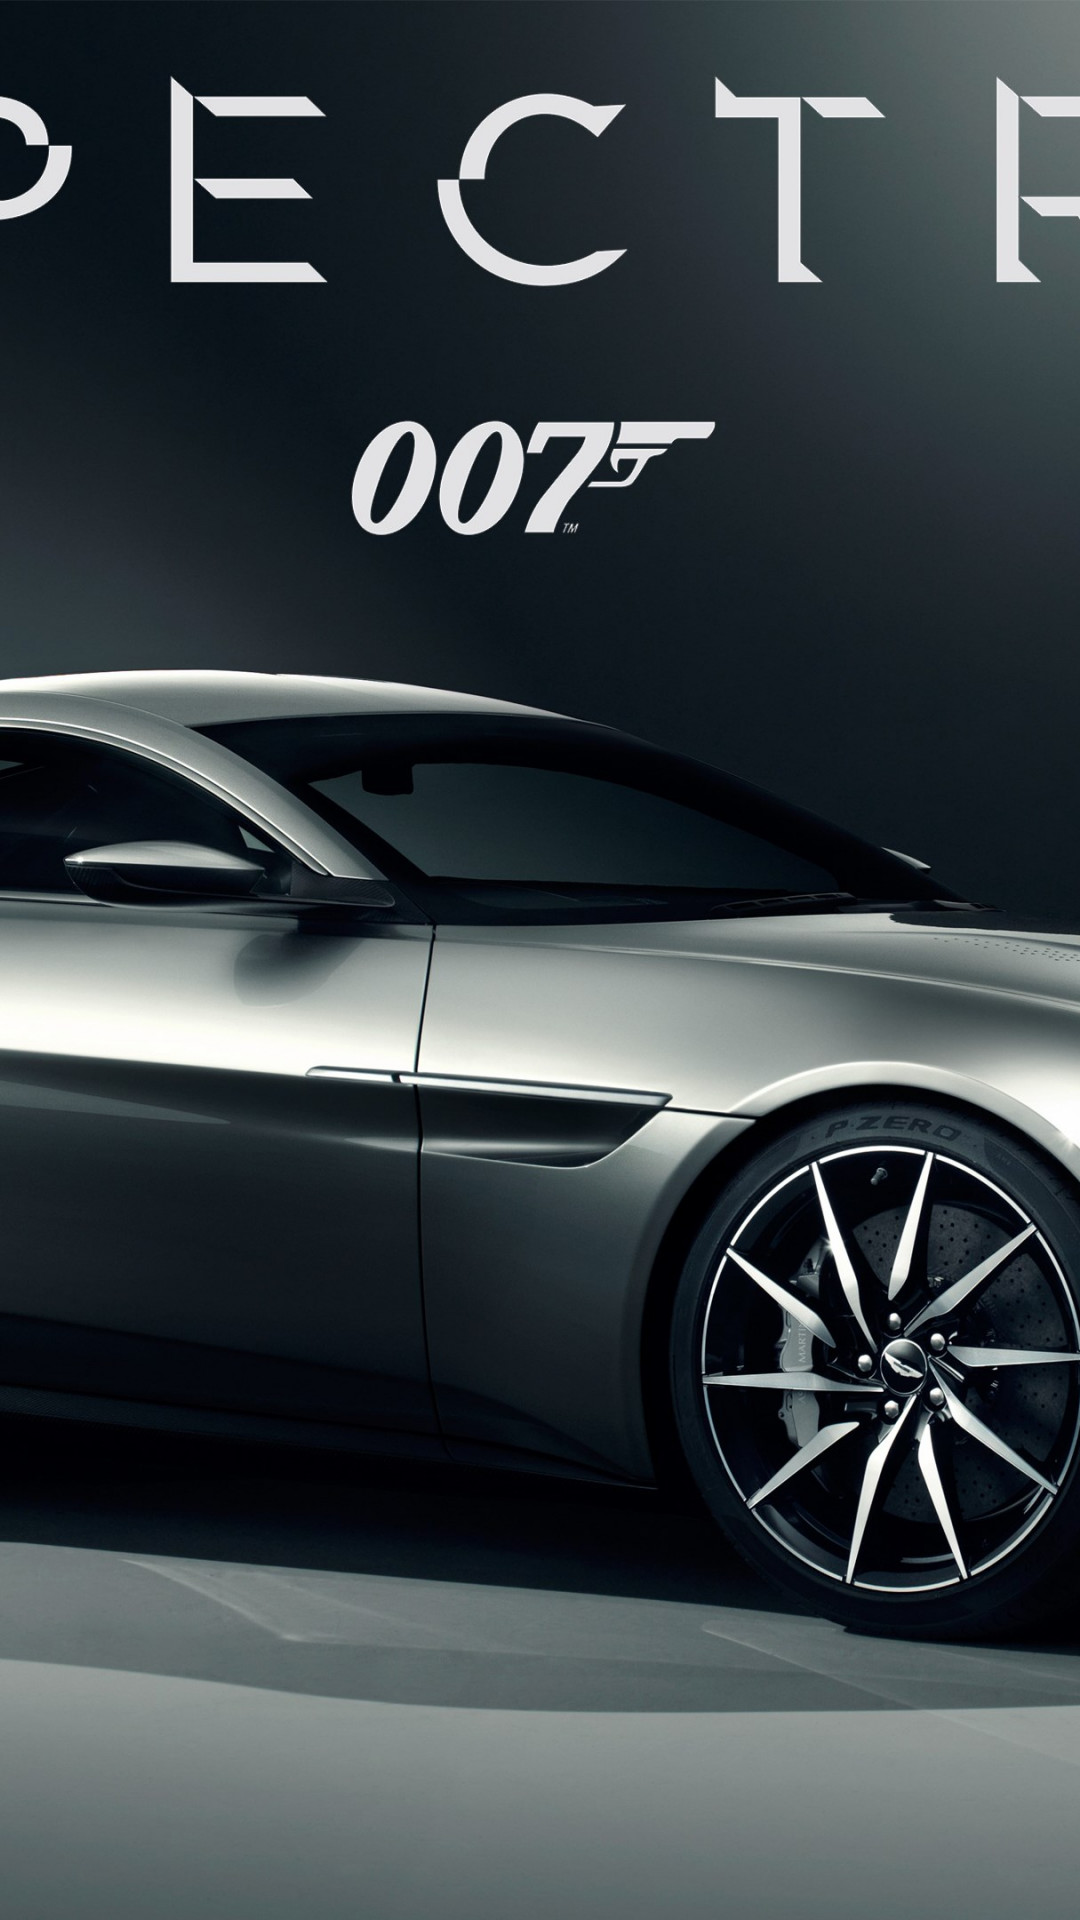 Aston Martin Db10 007 Spectre Car Wallpaper - James Bond Daniel Craig Cars - HD Wallpaper 